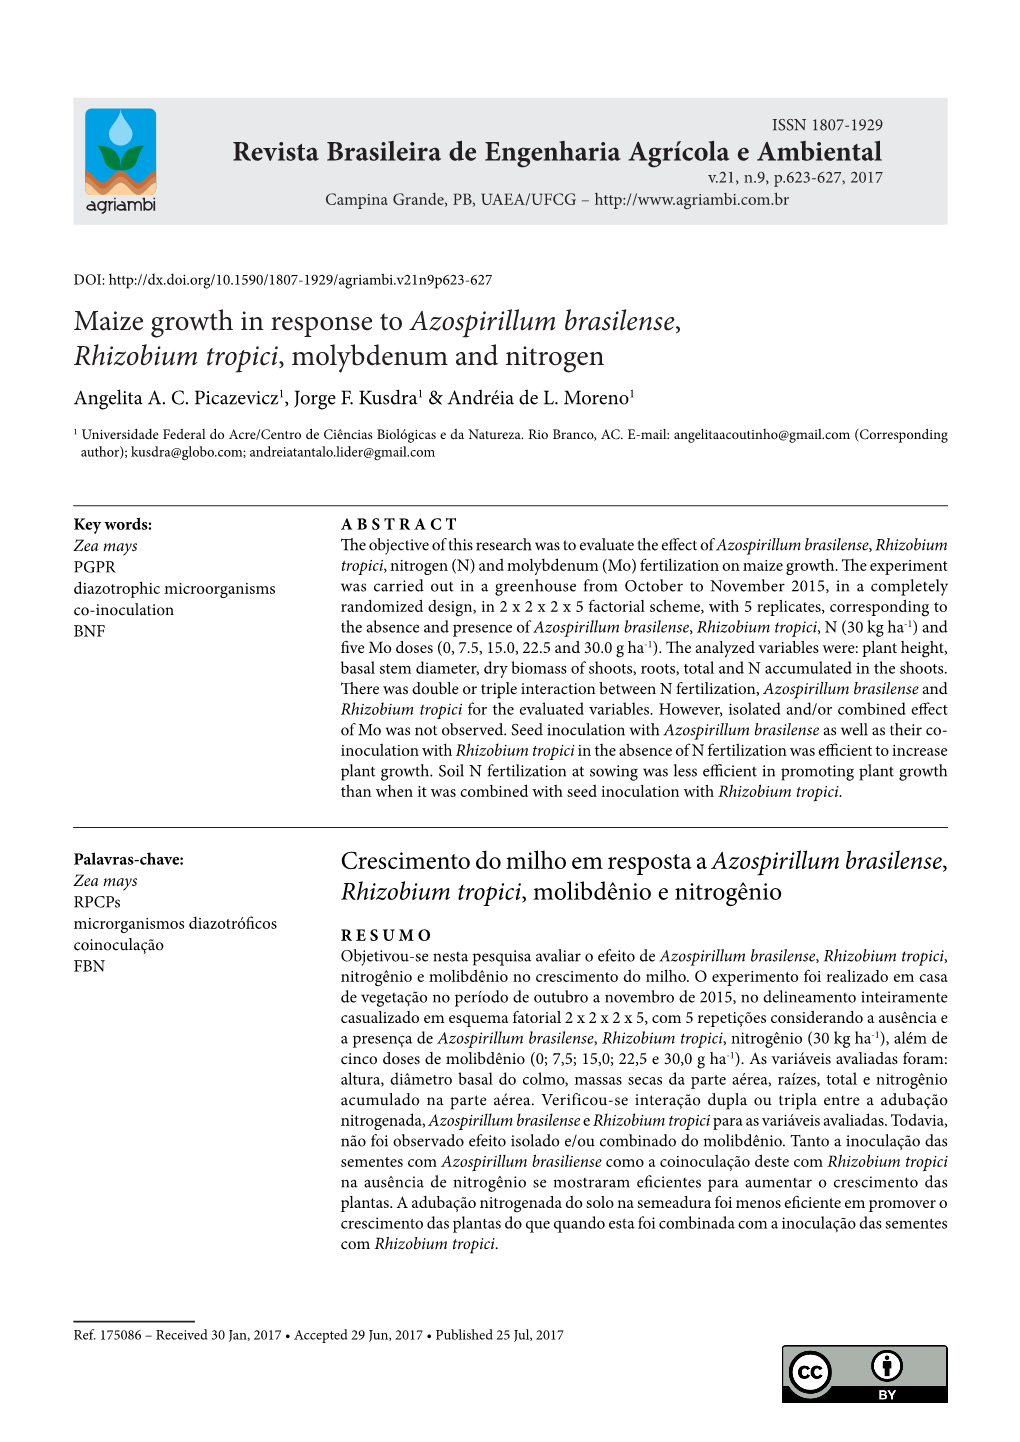 Maize Growth in Response to Azospirillum Brasilense, Rhizobium Tropici, Molybdenum and Nitrogen Angelita A